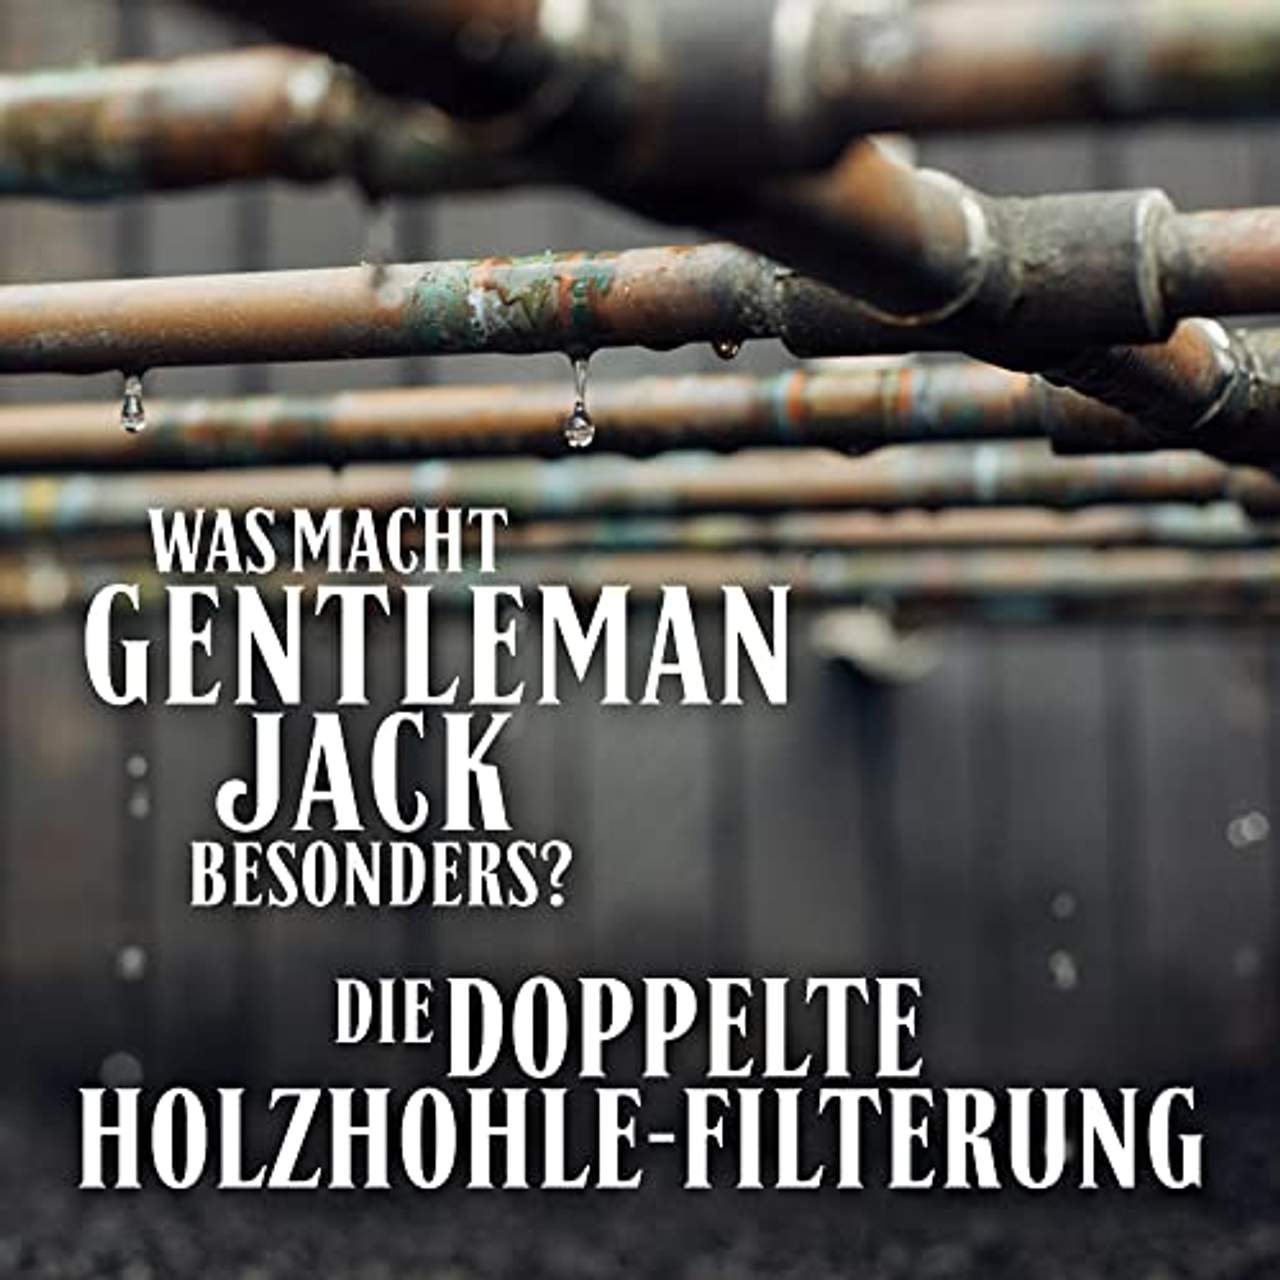 Jack Daniel's Gentleman Jack Rare Tennessee Whiskey